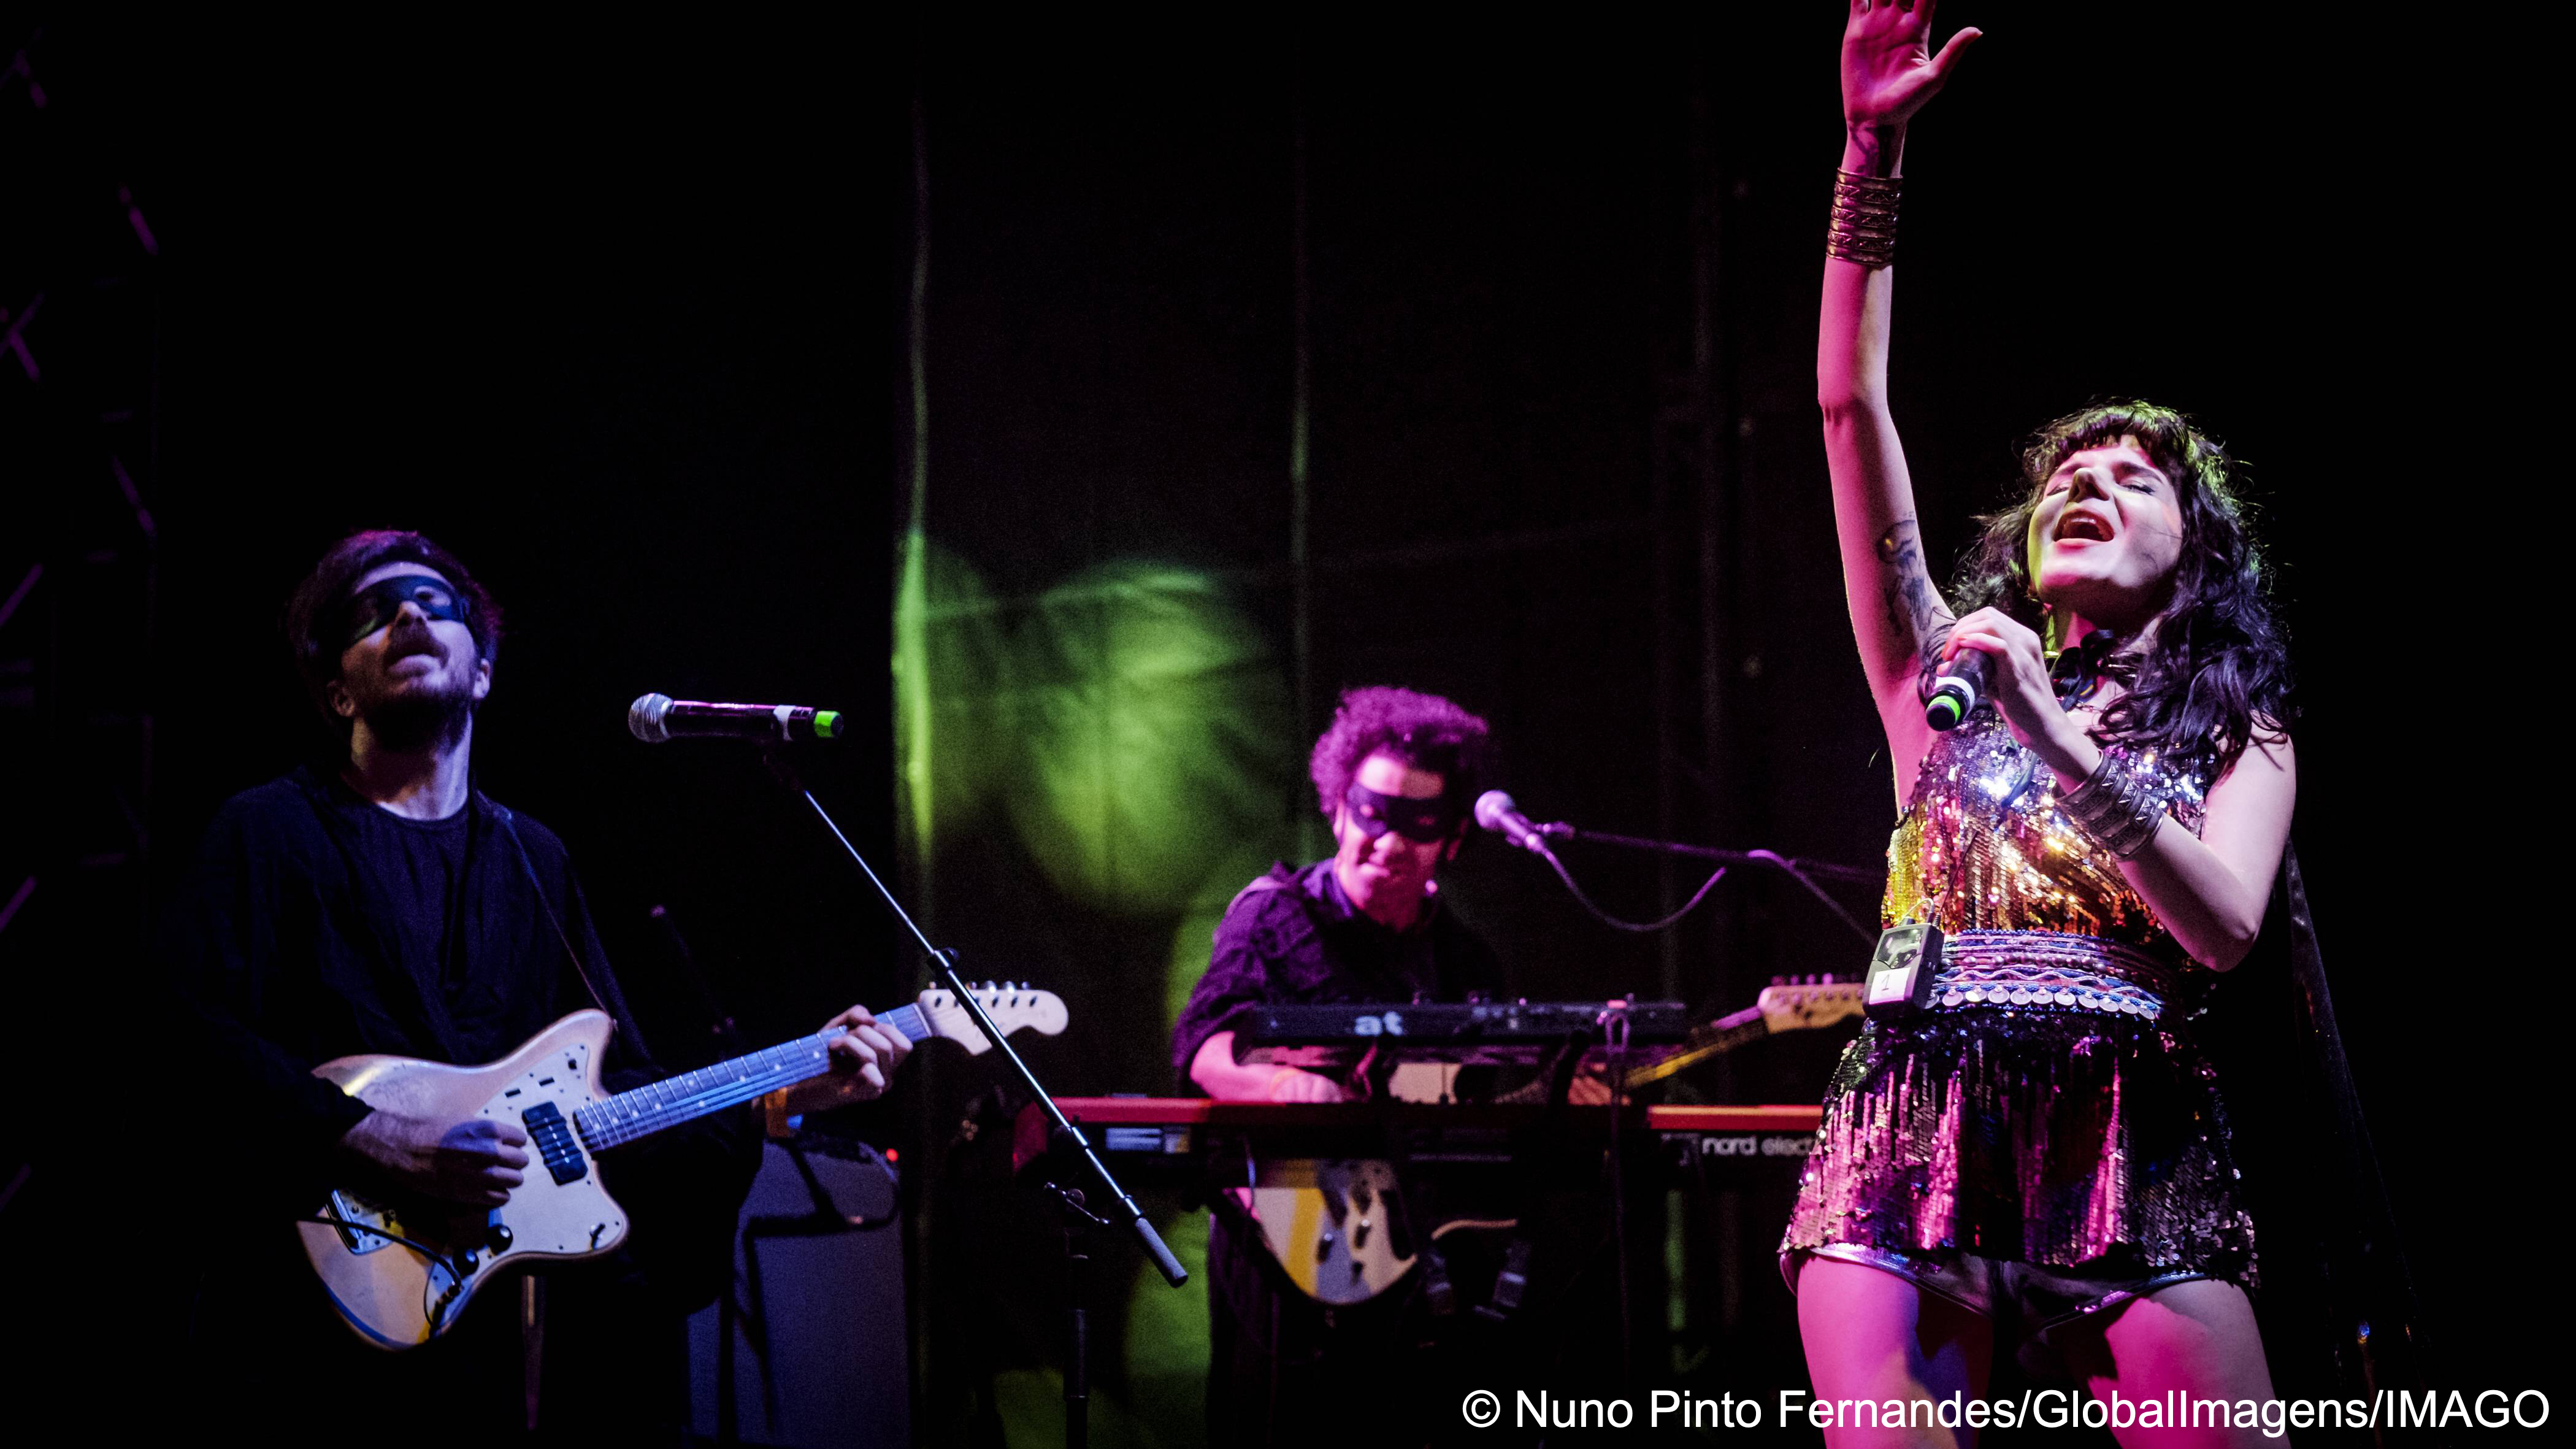 المغنية الموسيقية غايا سو آكيول صاحبة ألبوم. Gaye Su Akyol stretches her right arm into the air while singing on stage alongside two masked musicians (photo: Nuno Pinto Fernandes/GlobalImagens/IMAGO)